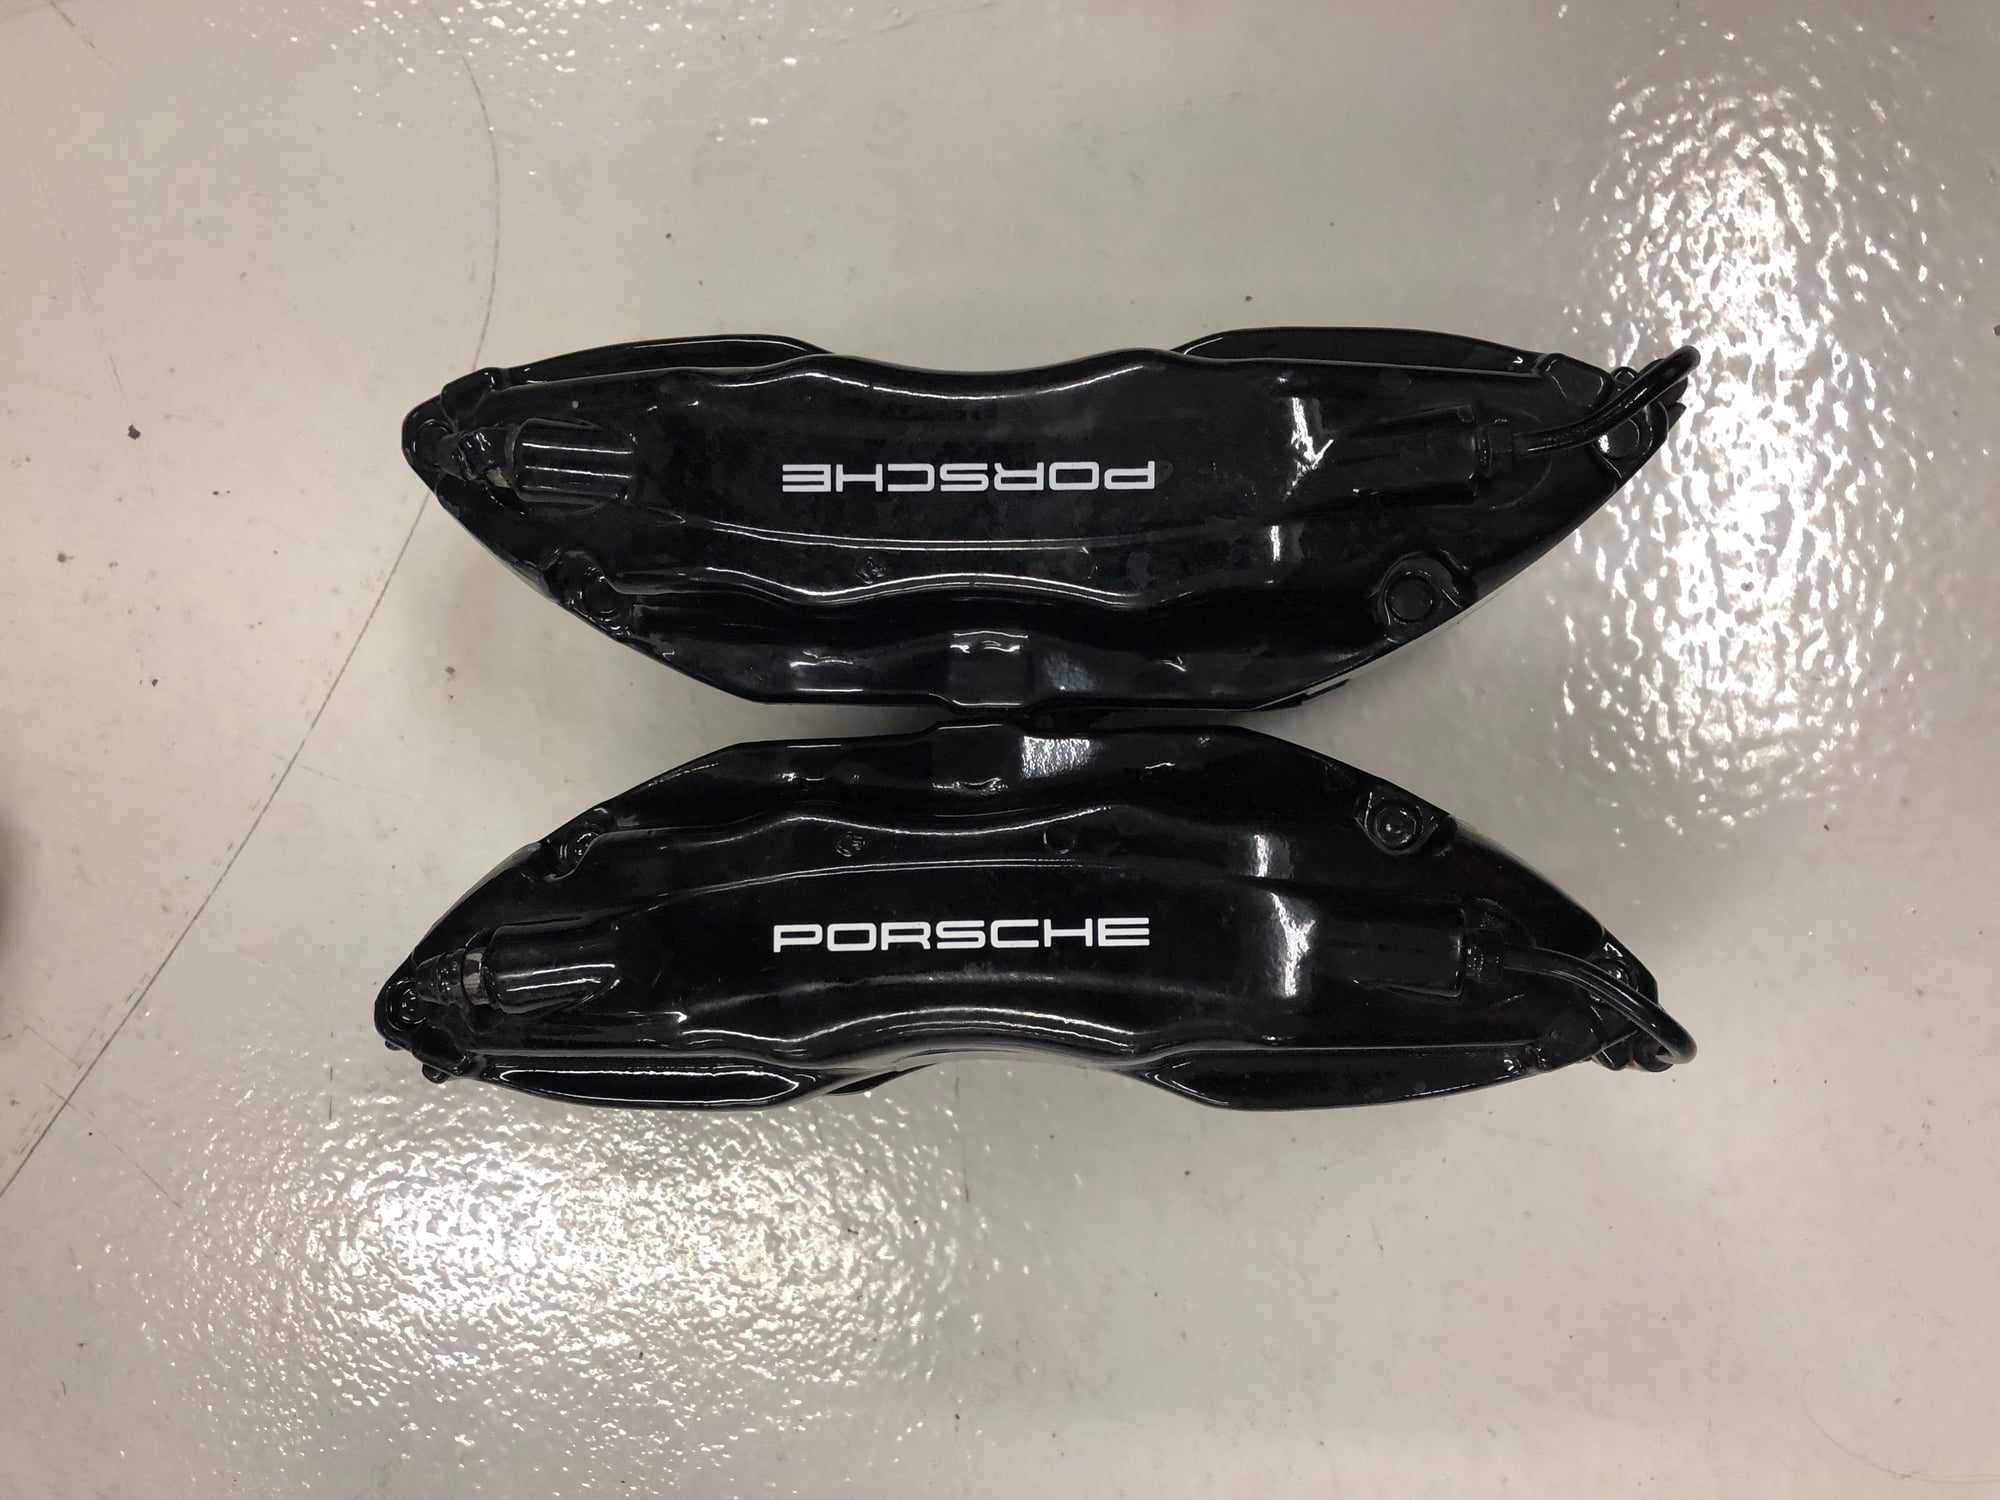 Brakes - 928 GTS BIG BLACK CALIPERS - NEW - ORIGINAL PORSCHE - AND MORE - New - Phoenix, AZ 85018, United States